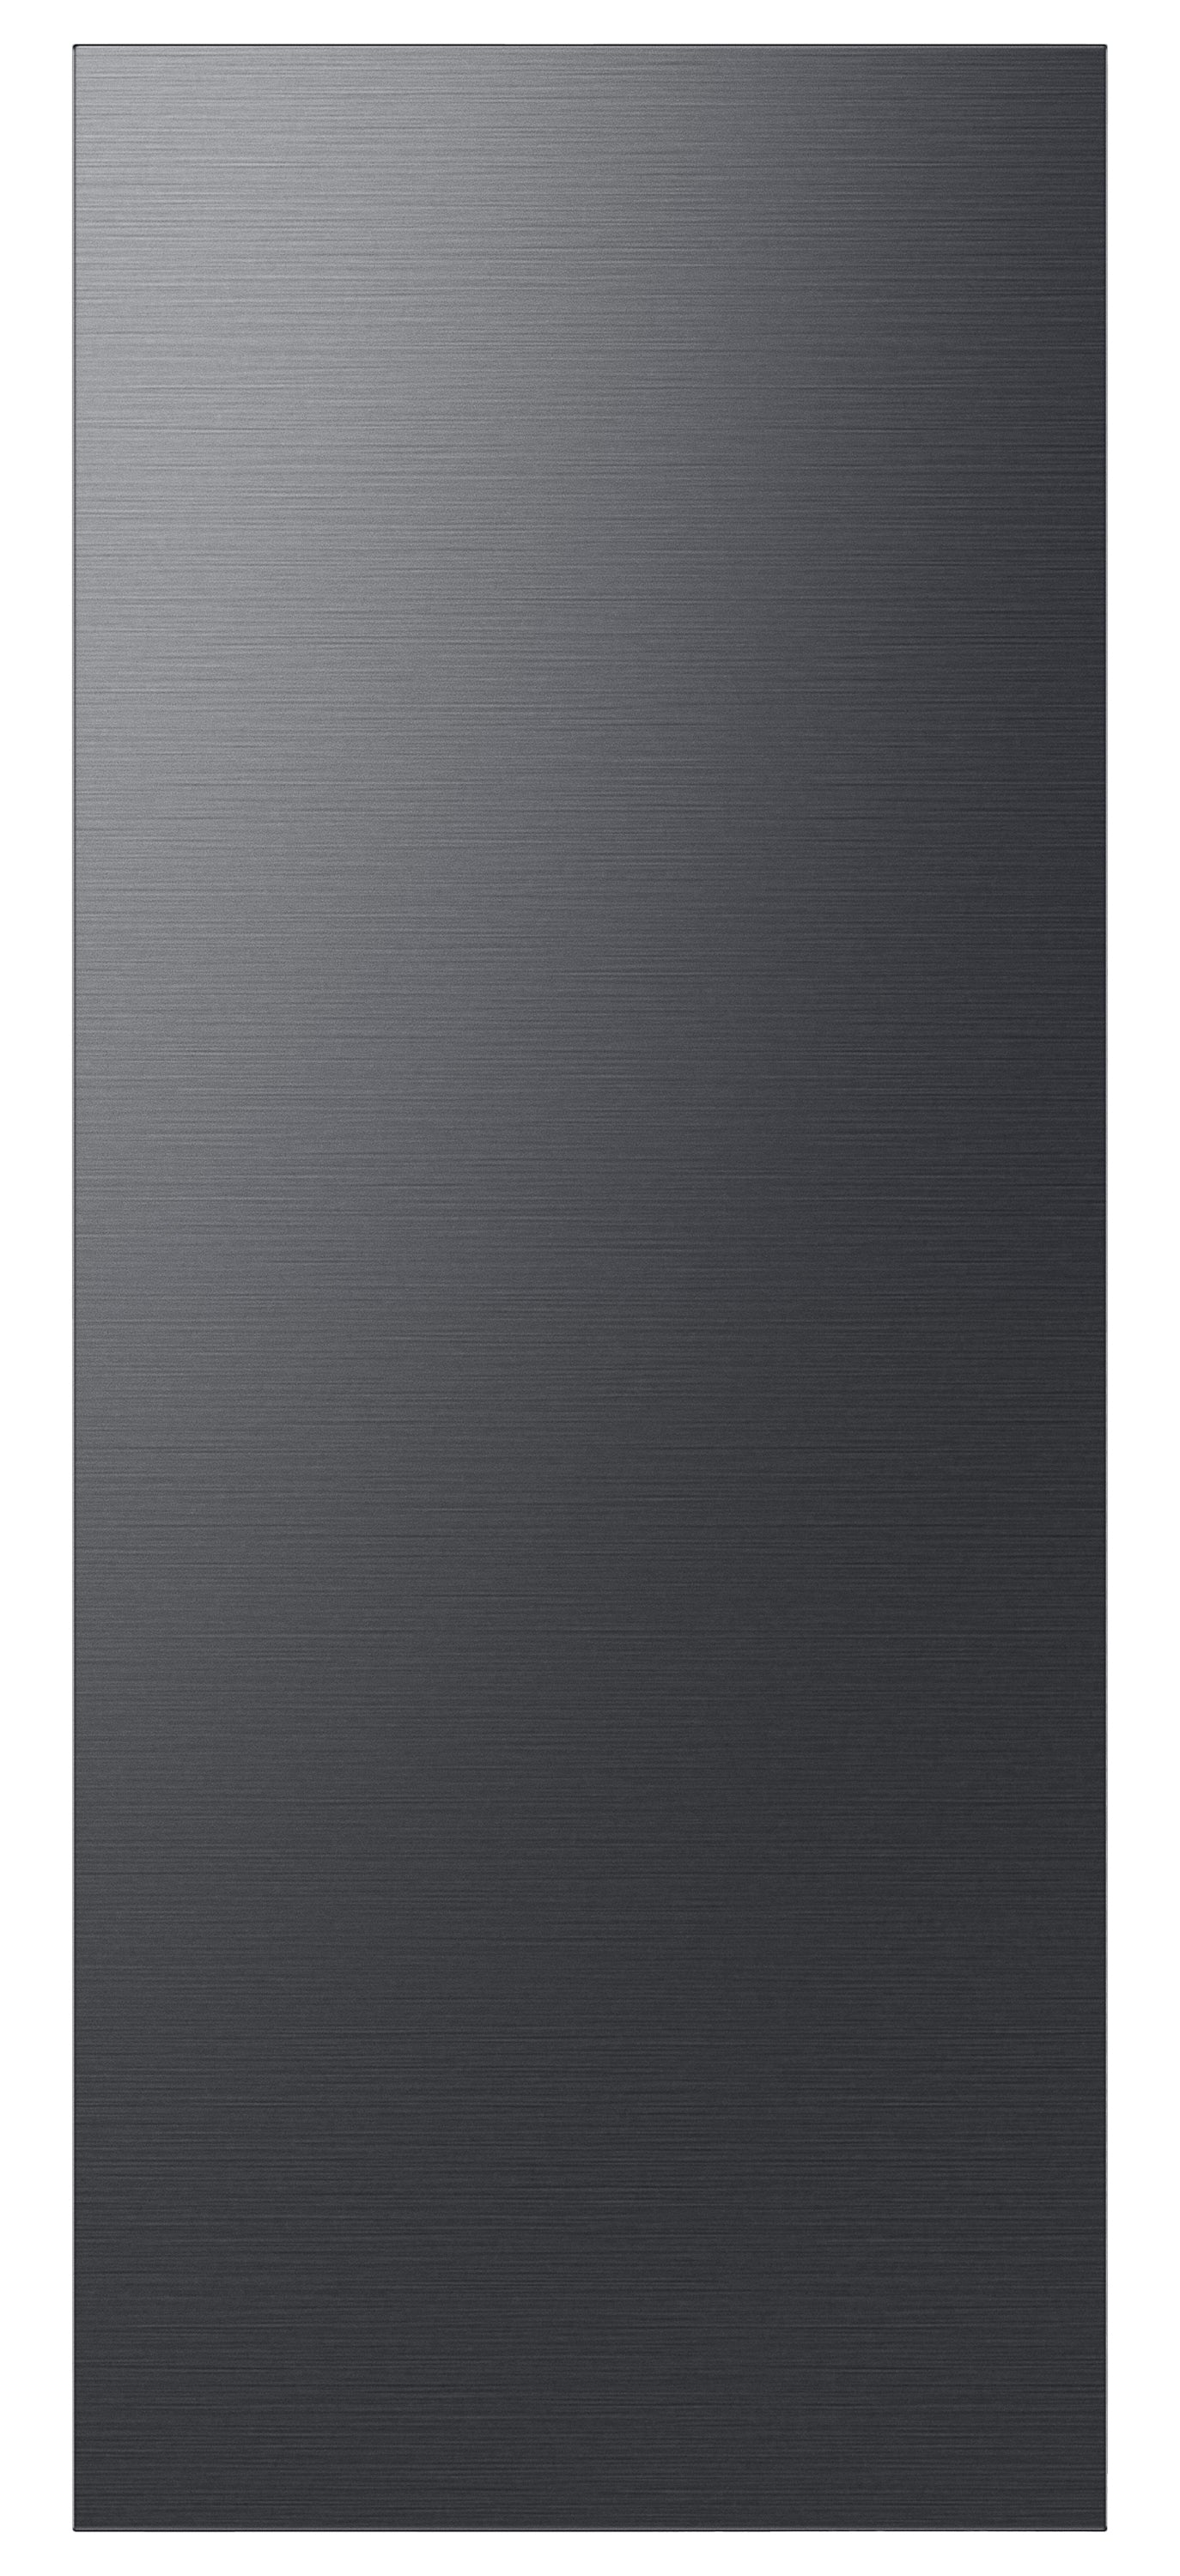 Samsung BESPOKE Matte Black Steel Custom Top Panel for 36" French-Door Refrigerator - RA-F18DU3MT/AA